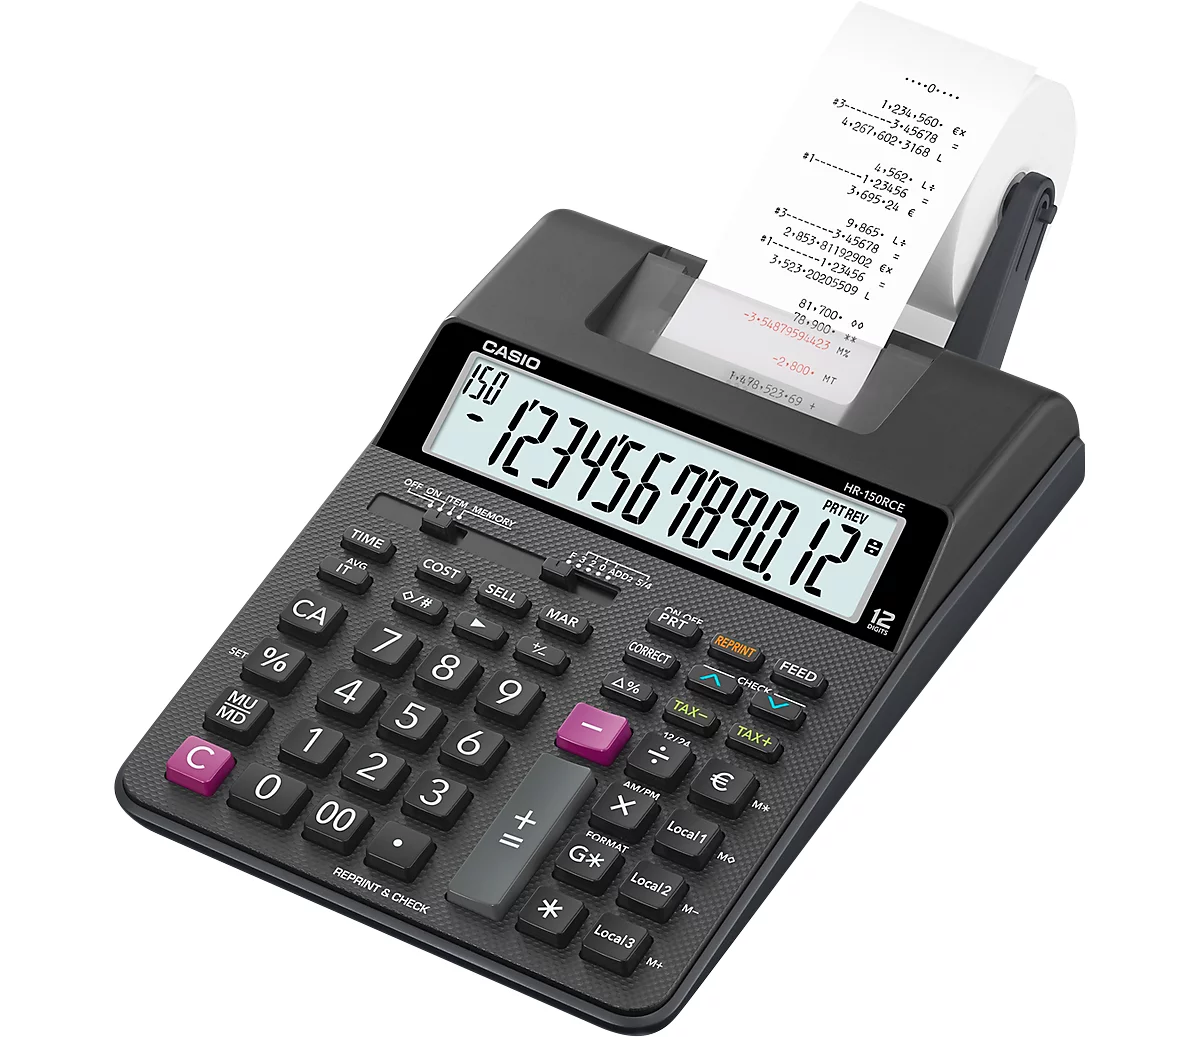 Calculadora con impresora Casio HR-150RCE, pantalla LC de 12 dígitos, anchura de papel 58 mm